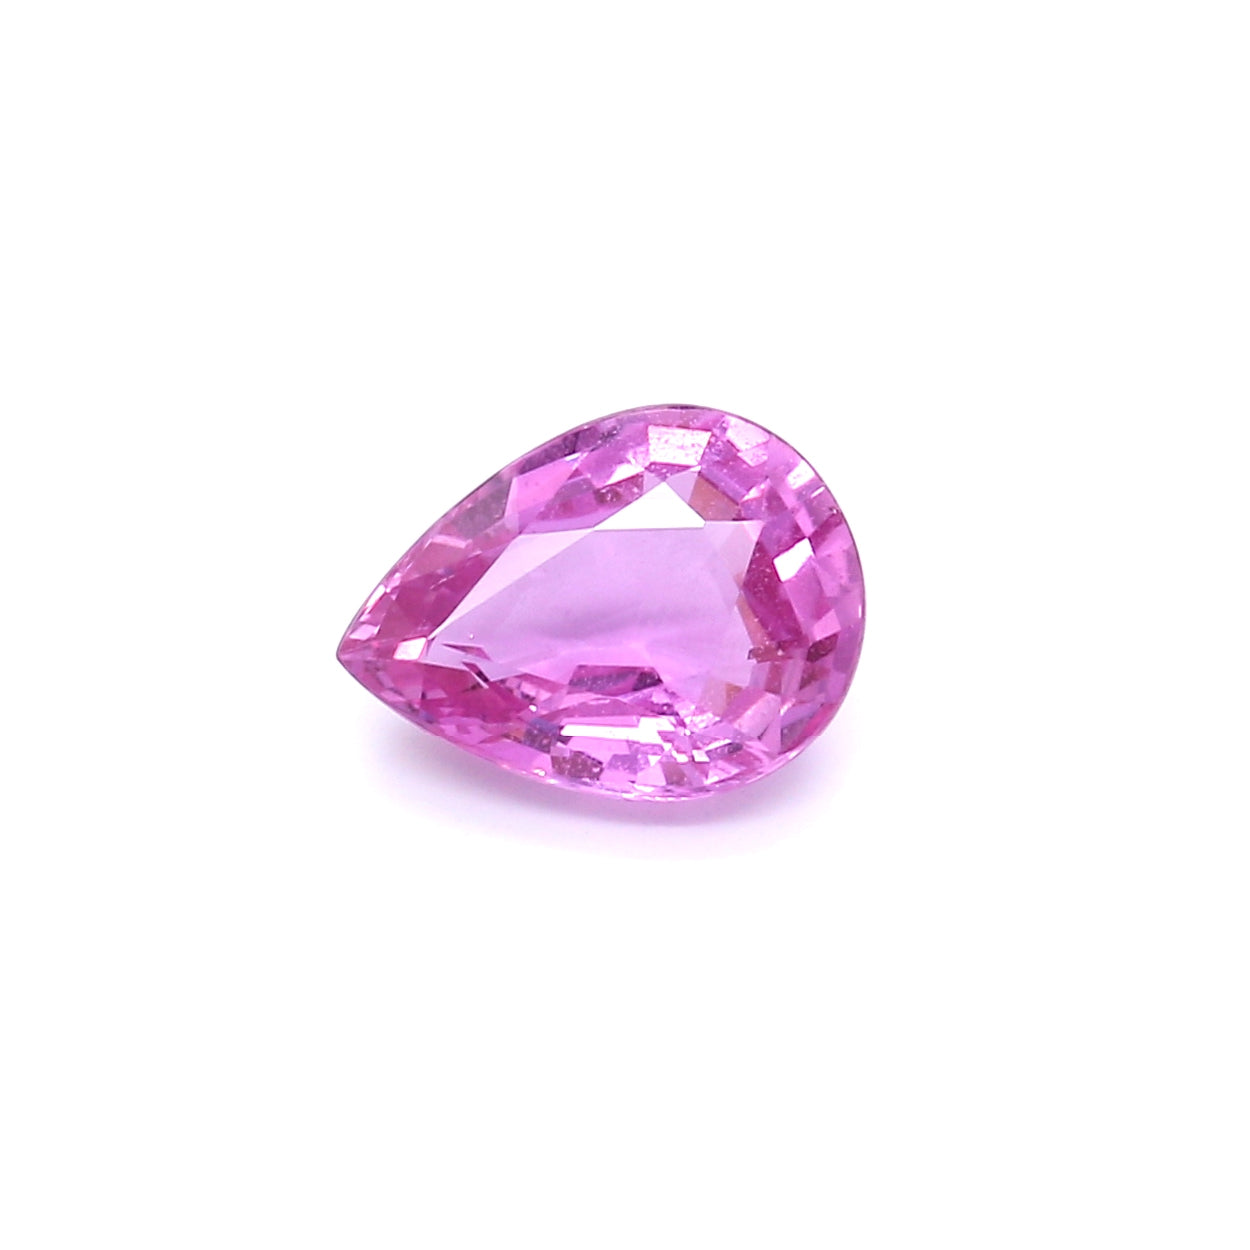 2.07ct Purplish Pink, Pear Shape Sapphire, Heated, Madagascar - 9.35 x 6.98 x 3.80mm